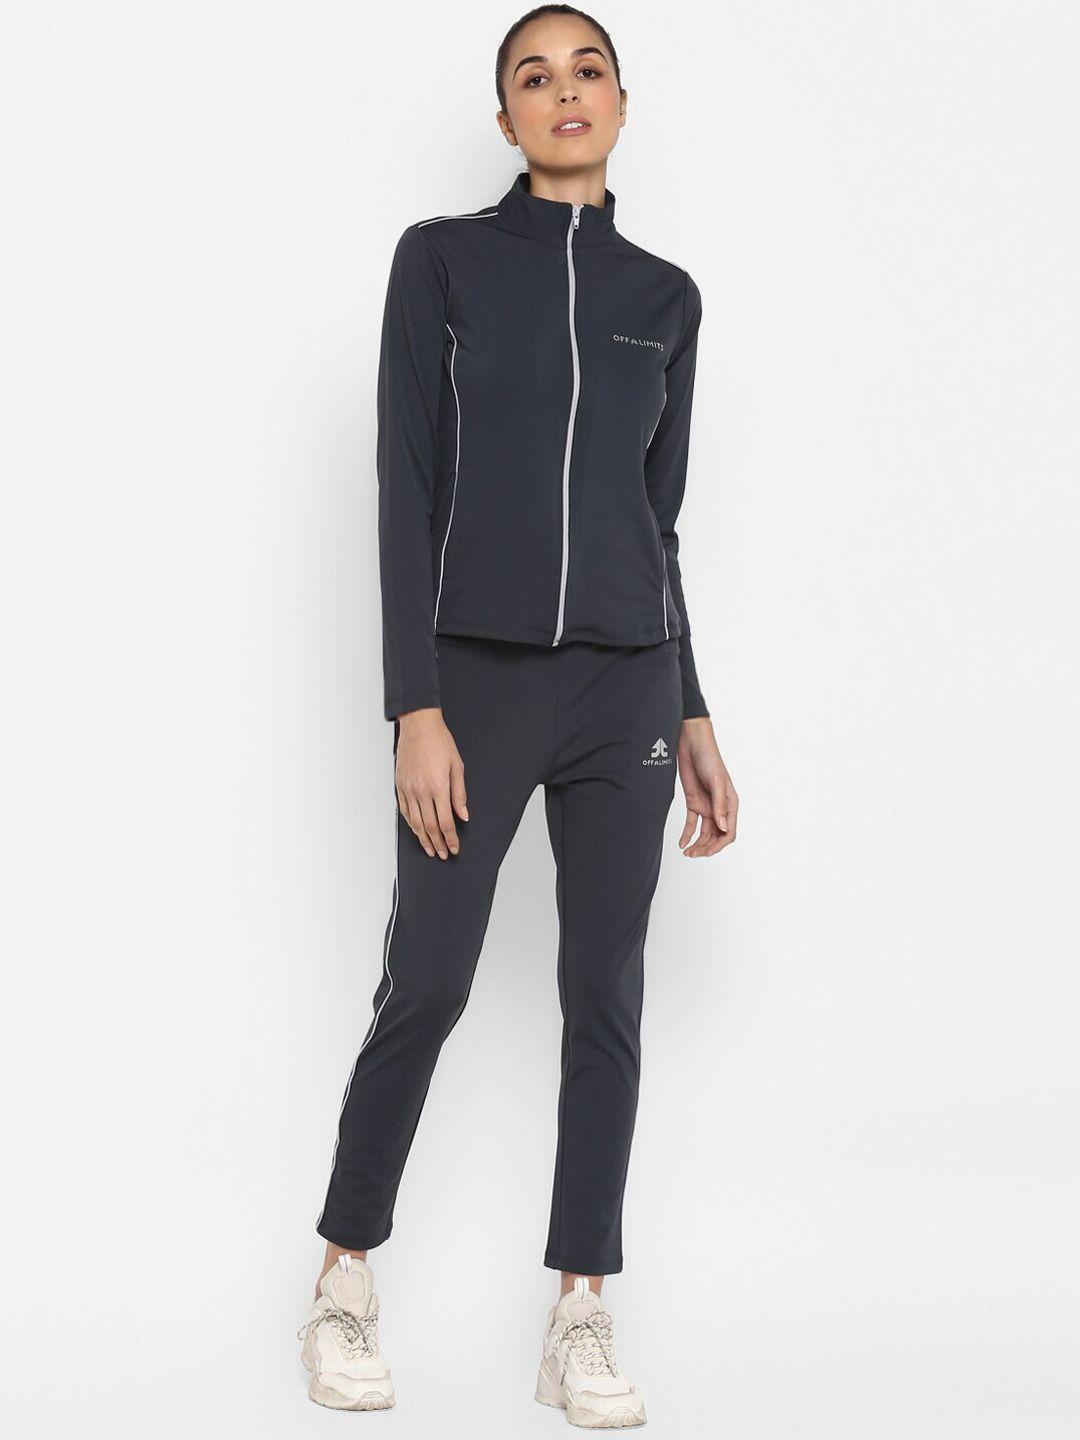 off-limits-women-grey-solid-sport-essentials-mock-collar-track-suit